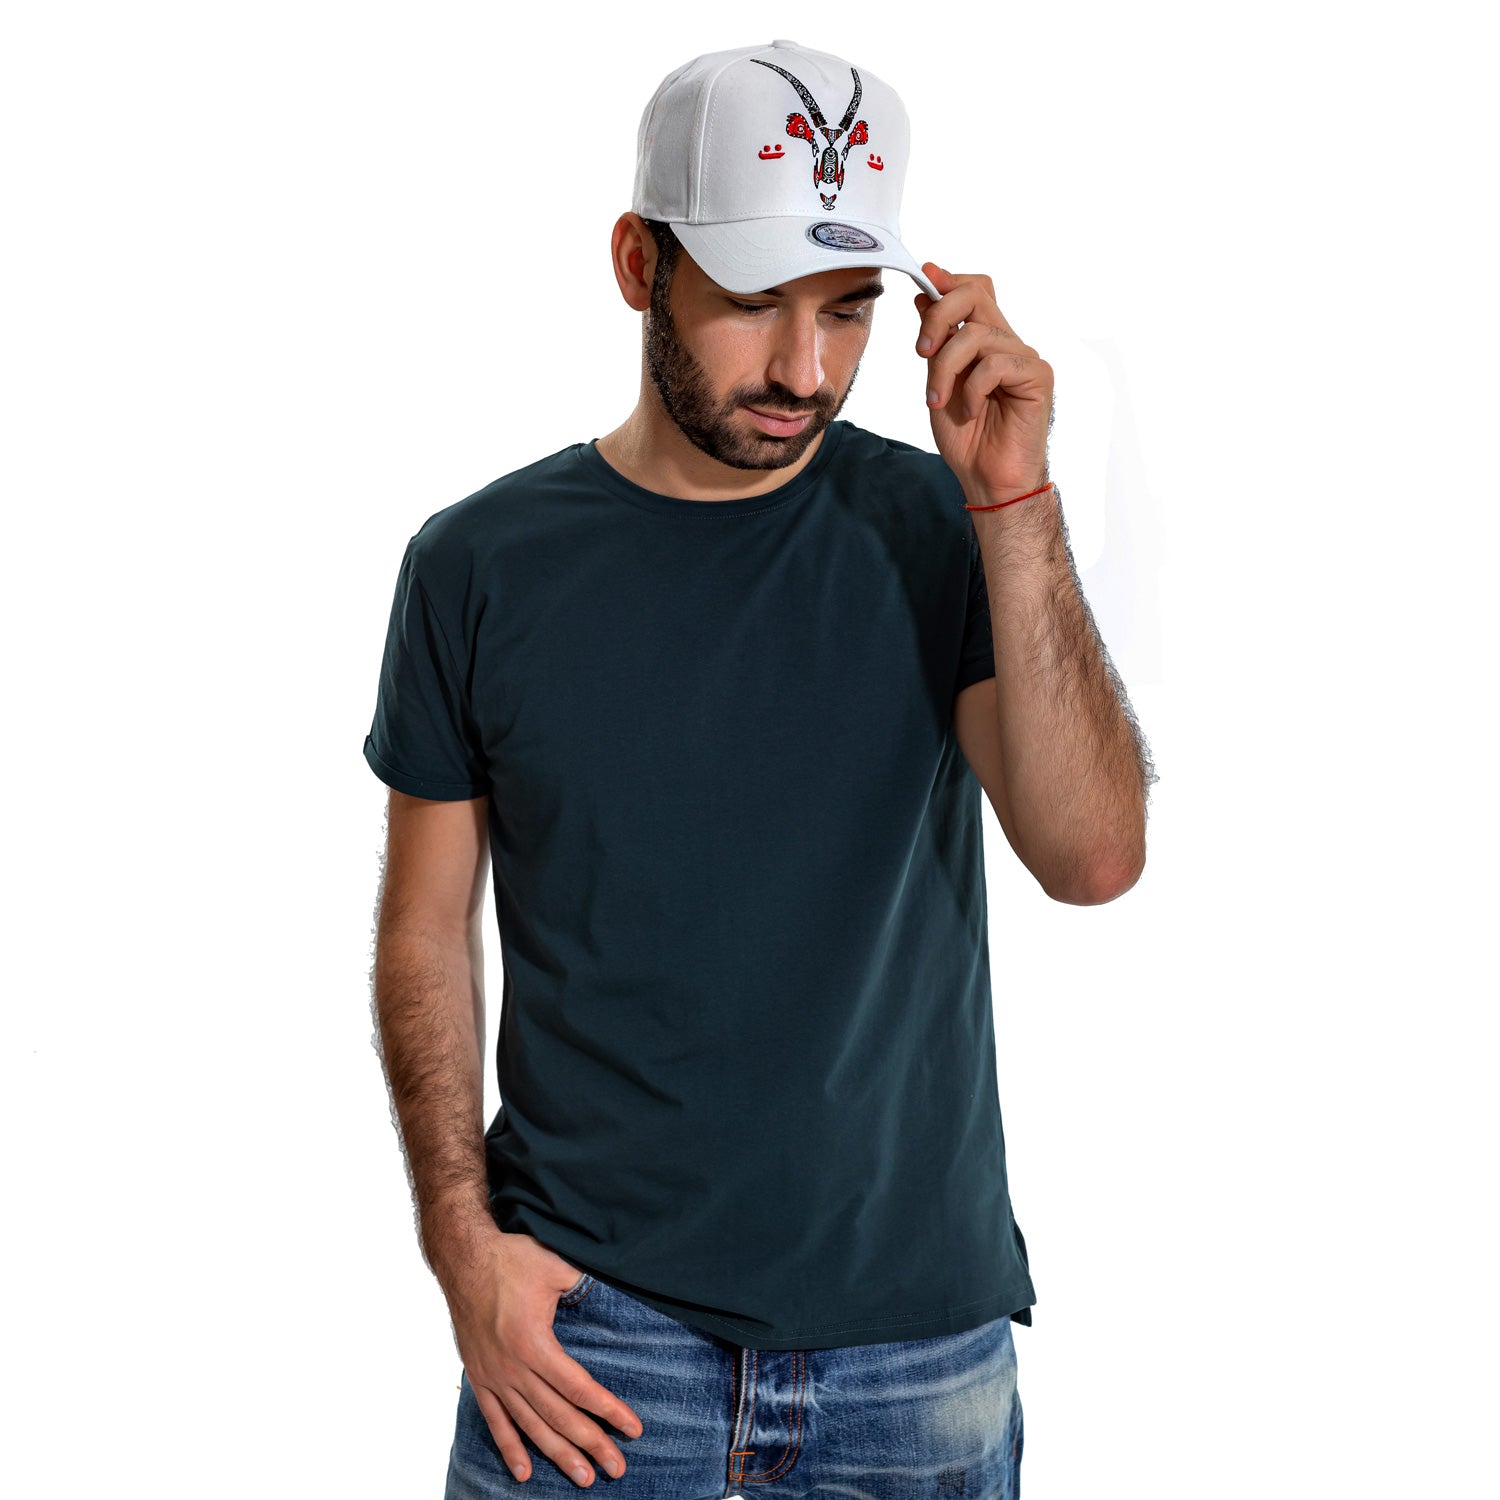 White baseball cap with Oryx embroidery al sadu HABB trucker cap and aegan t-shirt for man